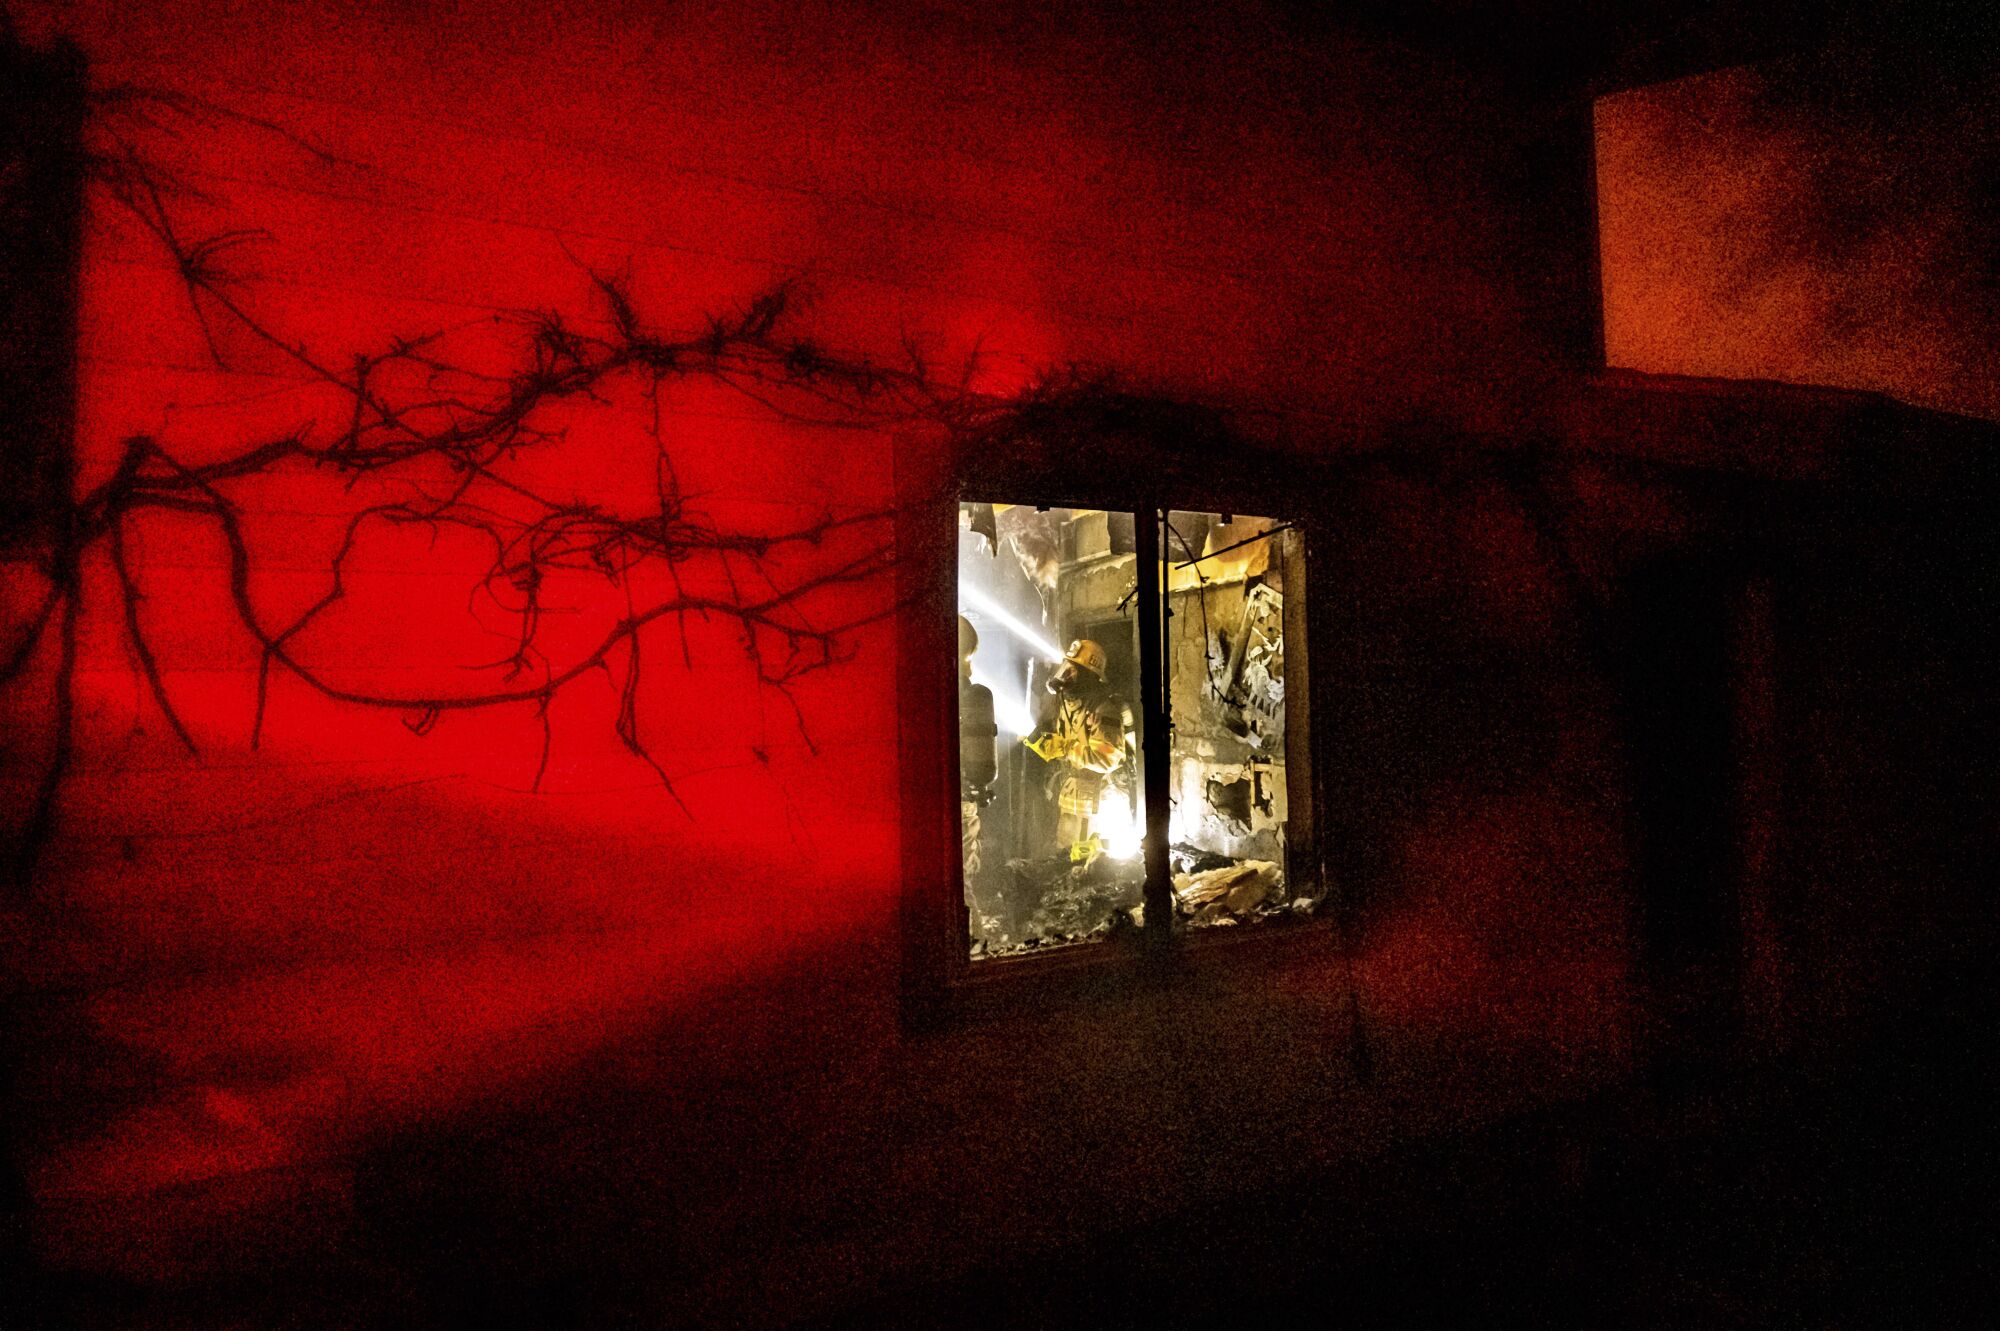 A firefighter illuminated in light inside a home, seen through the window